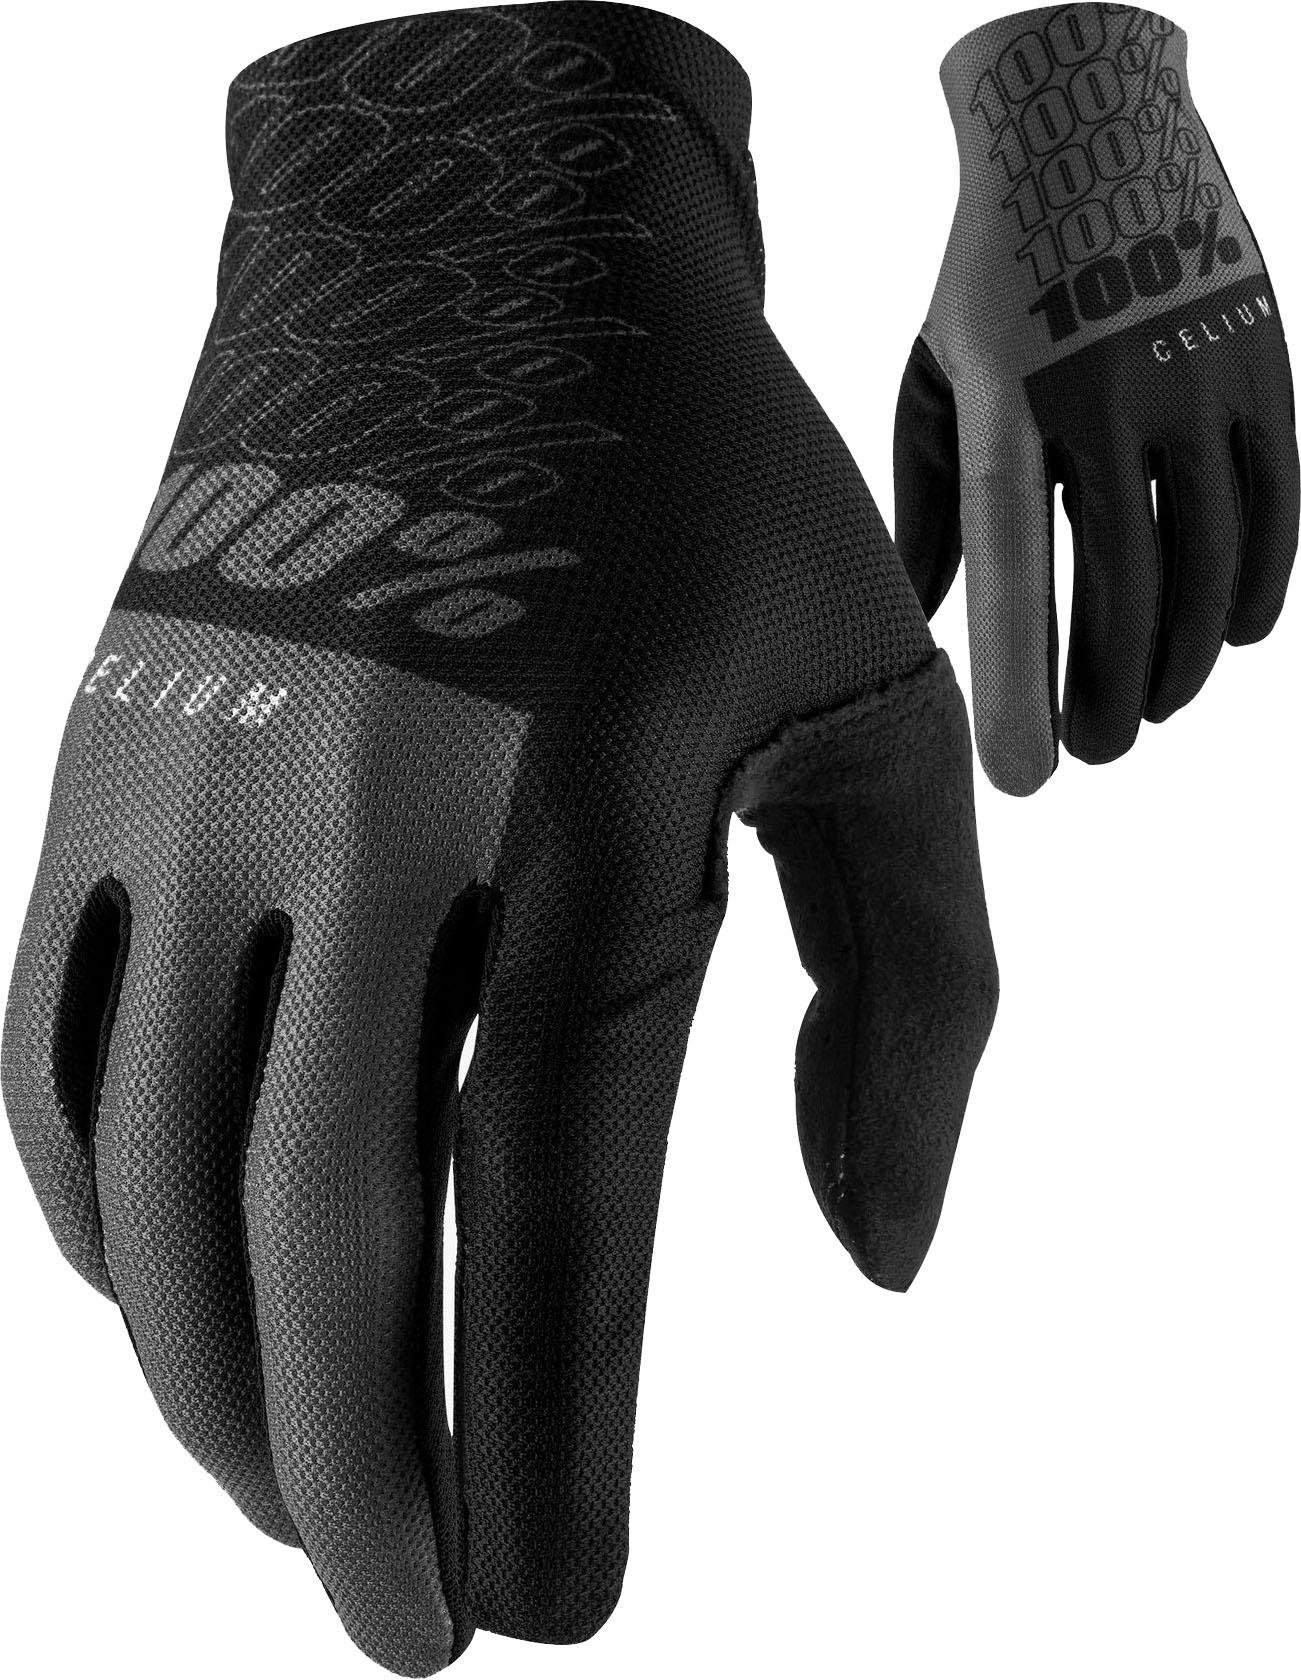 100% Celium Glove - Black/grey